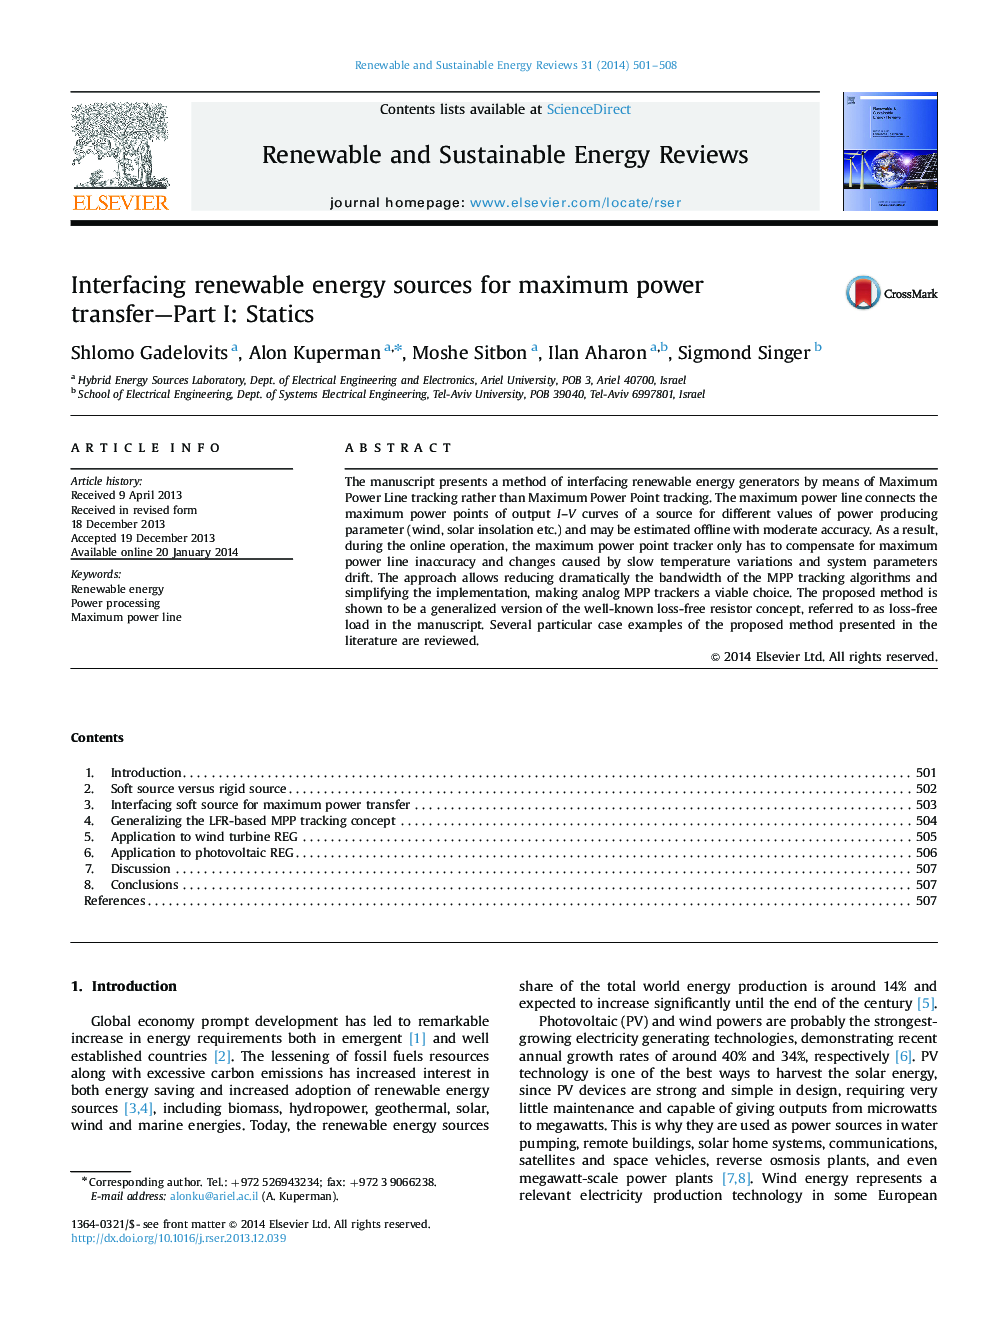 Interfacing renewable energy sources for maximum power transfer-Part I: Statics